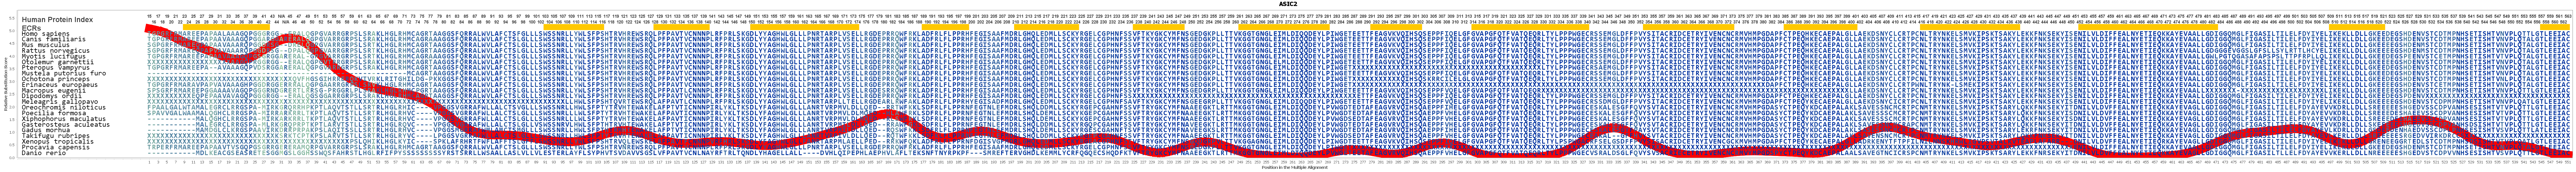 ASIC2 Gene - GeneCards | ASIC2 Protein 